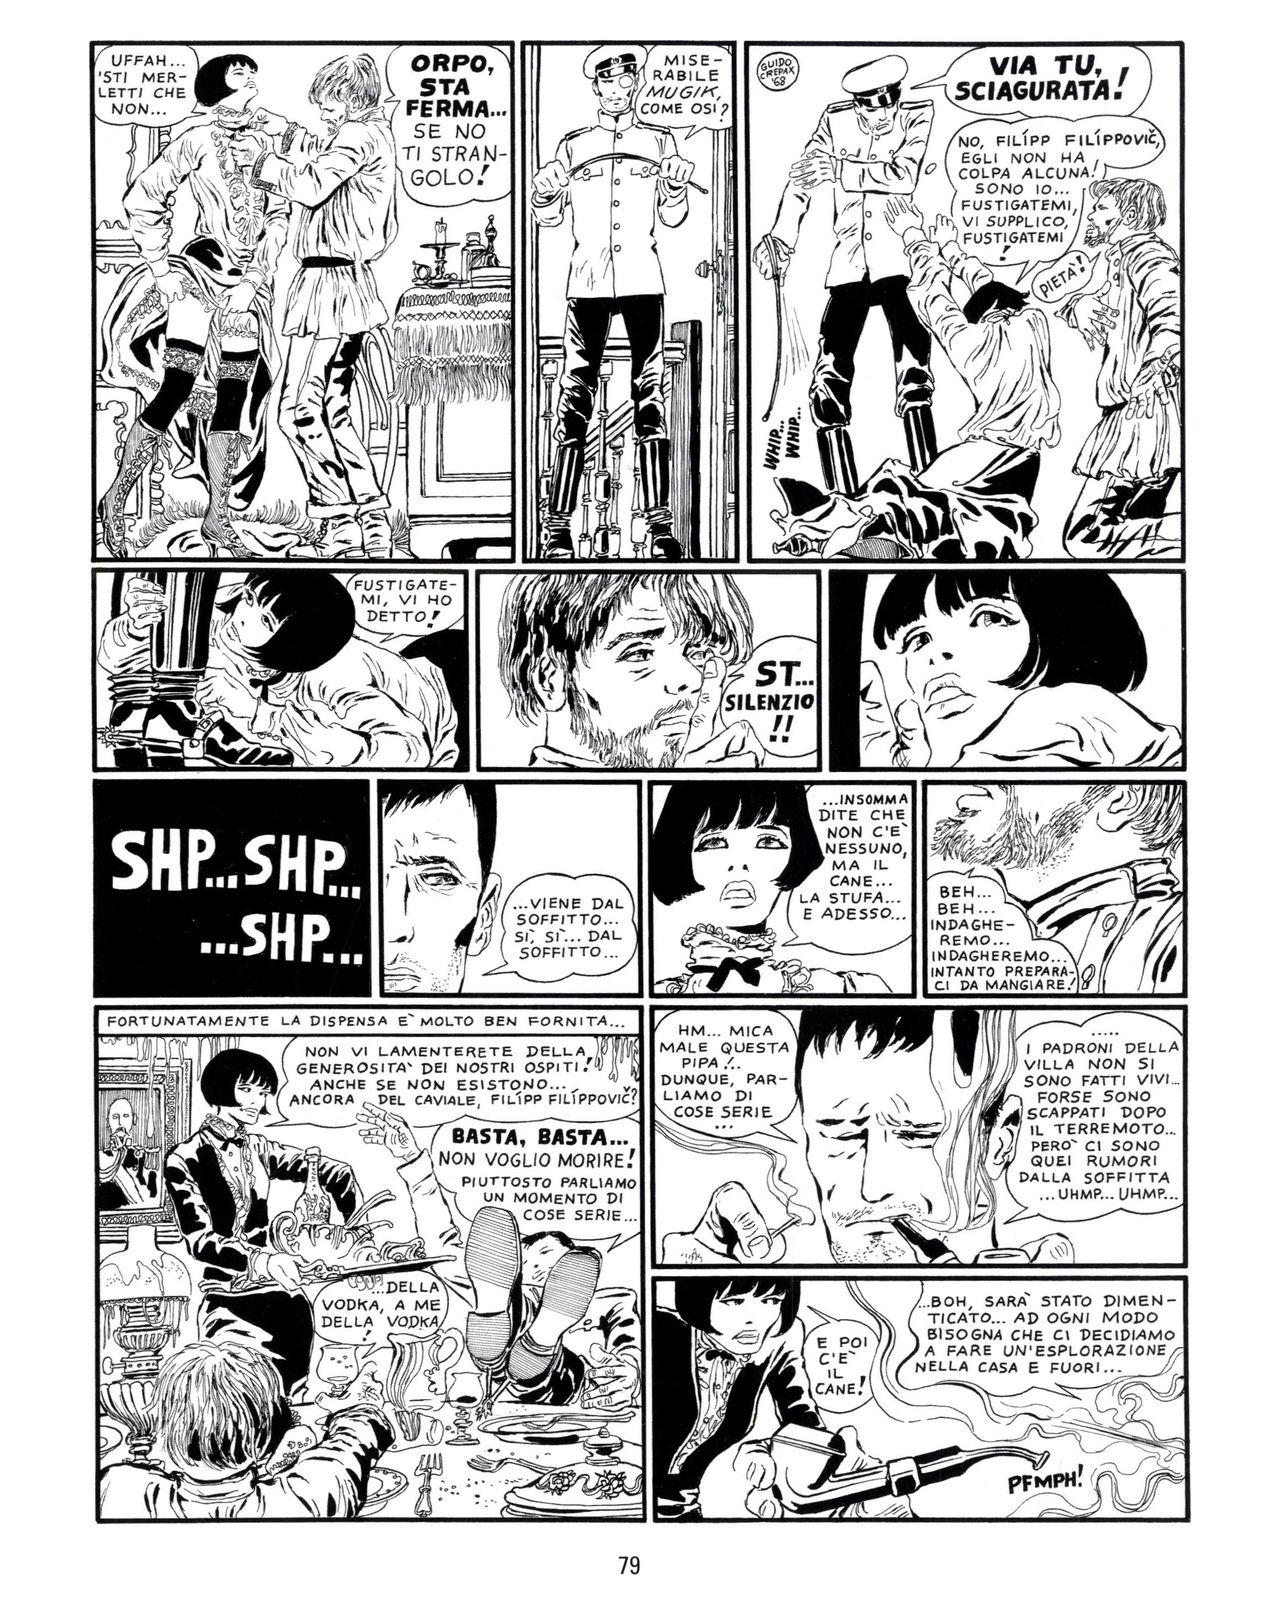 [Guido Crepax] Erotica Fumetti #25 : L'ascesa dei sotterranei : I cavalieri ciechi [Italian] 80